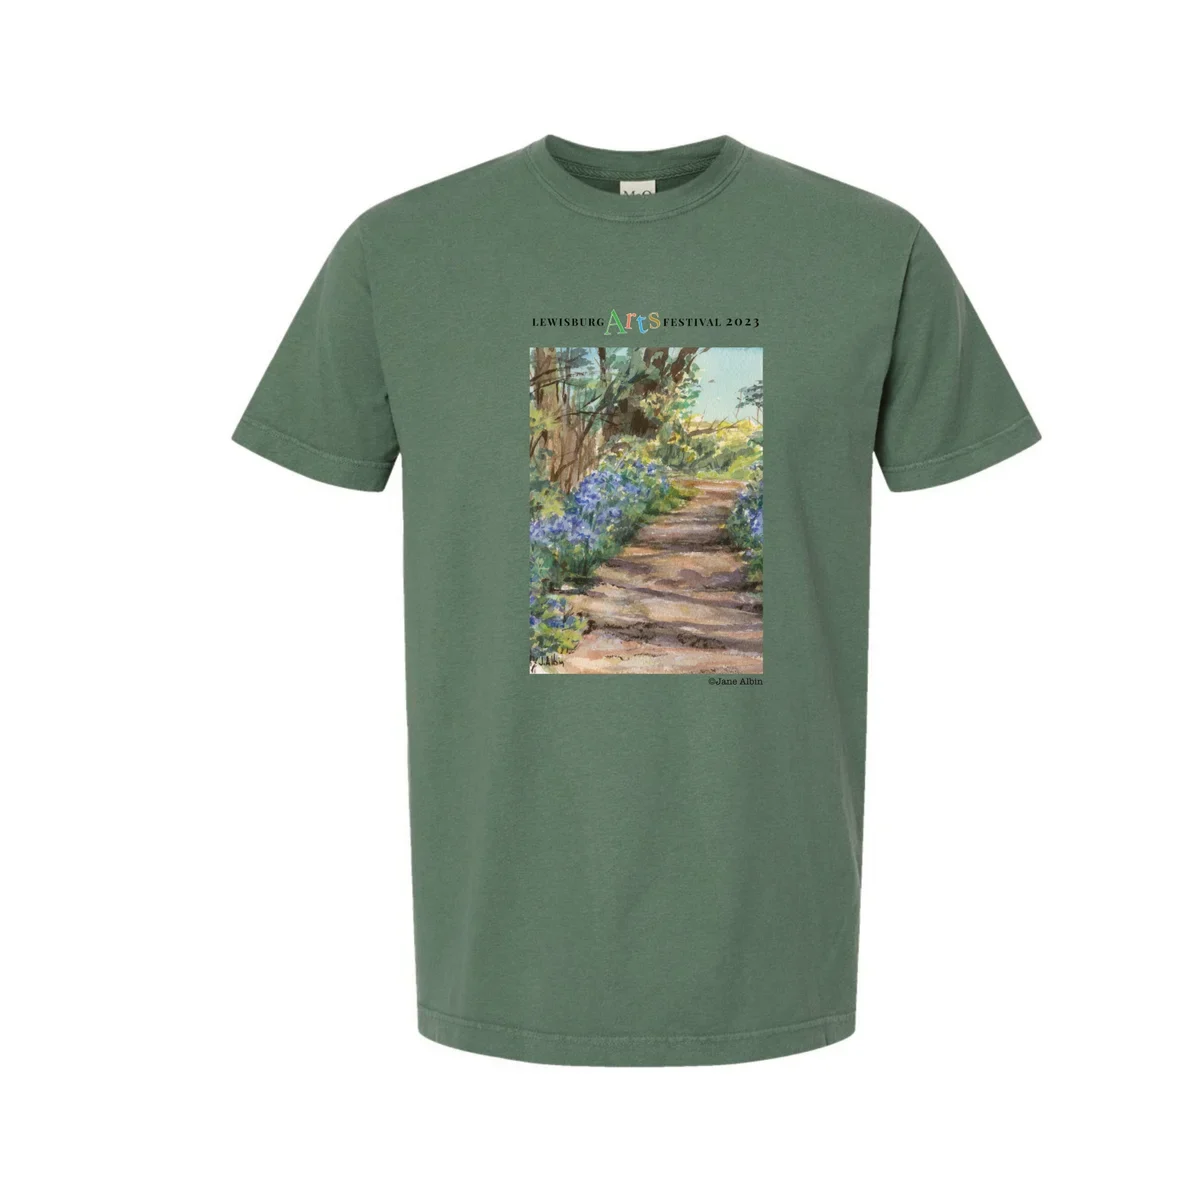 Lewisburg Arts Festival 2023 T-Shirt featuring Jane Albin's artwork on green short sleeve shirt.